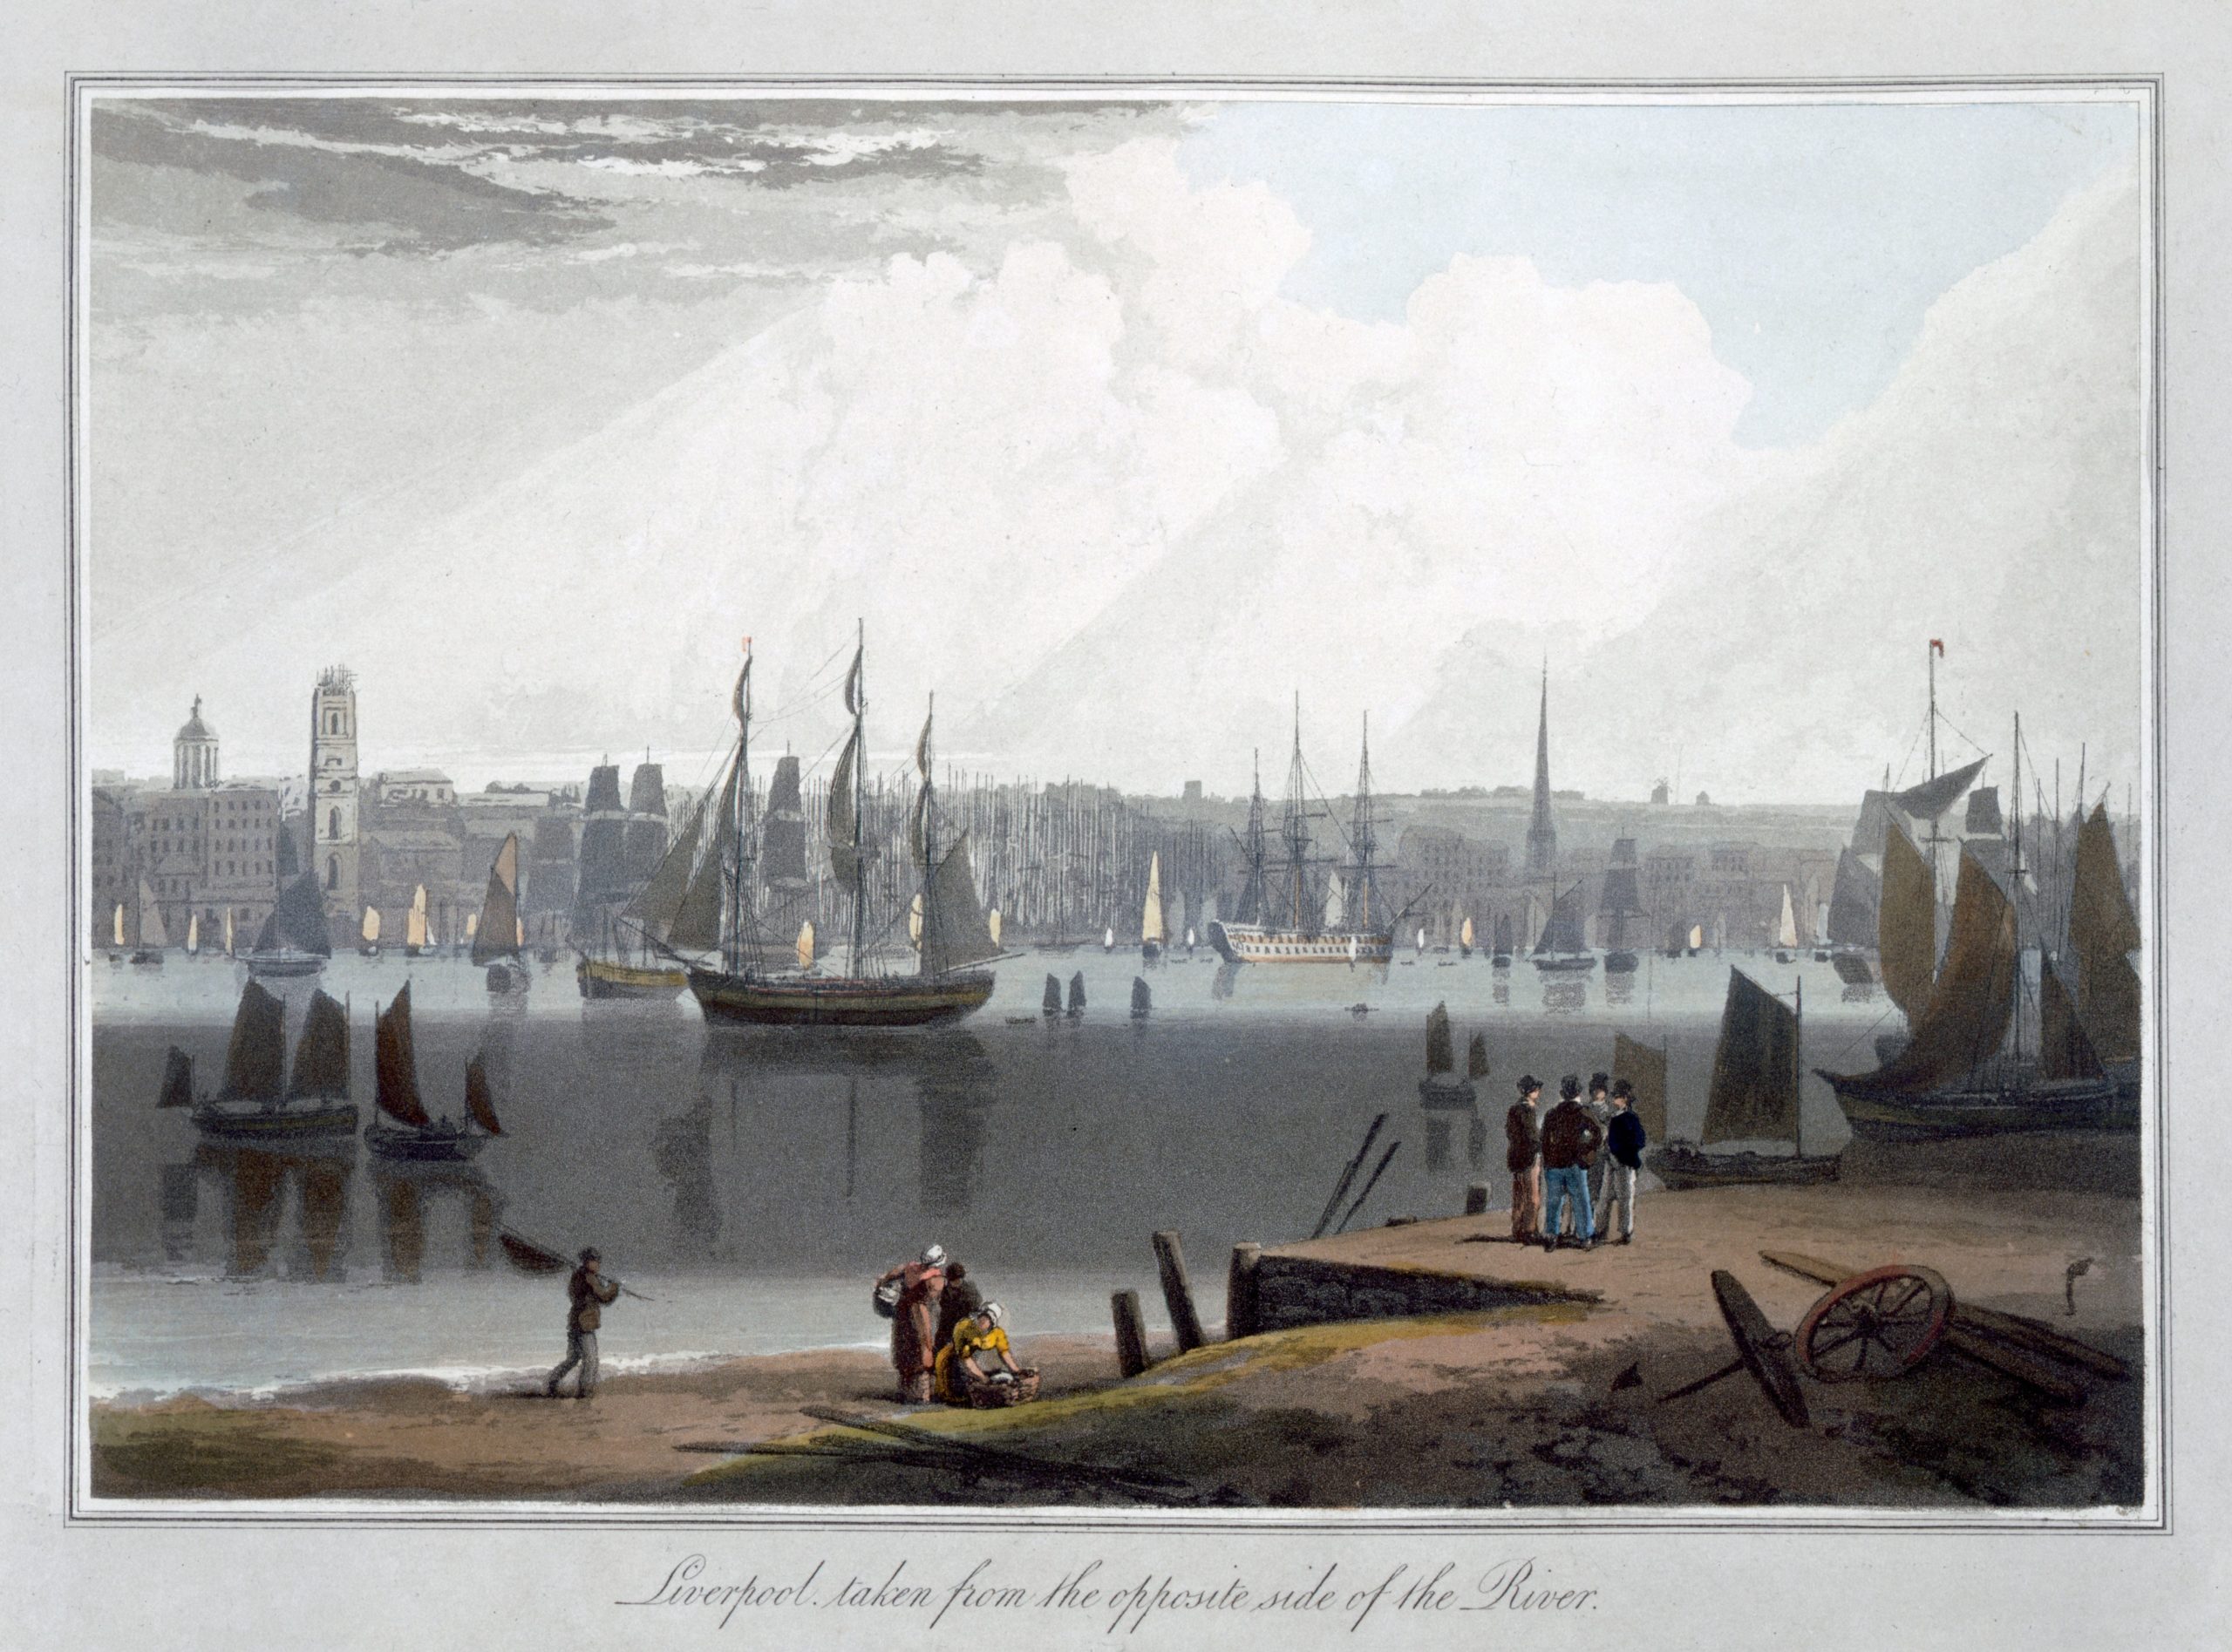 Slave trade transatlantic; history slavery; Slavery port; Albert dock liverpool